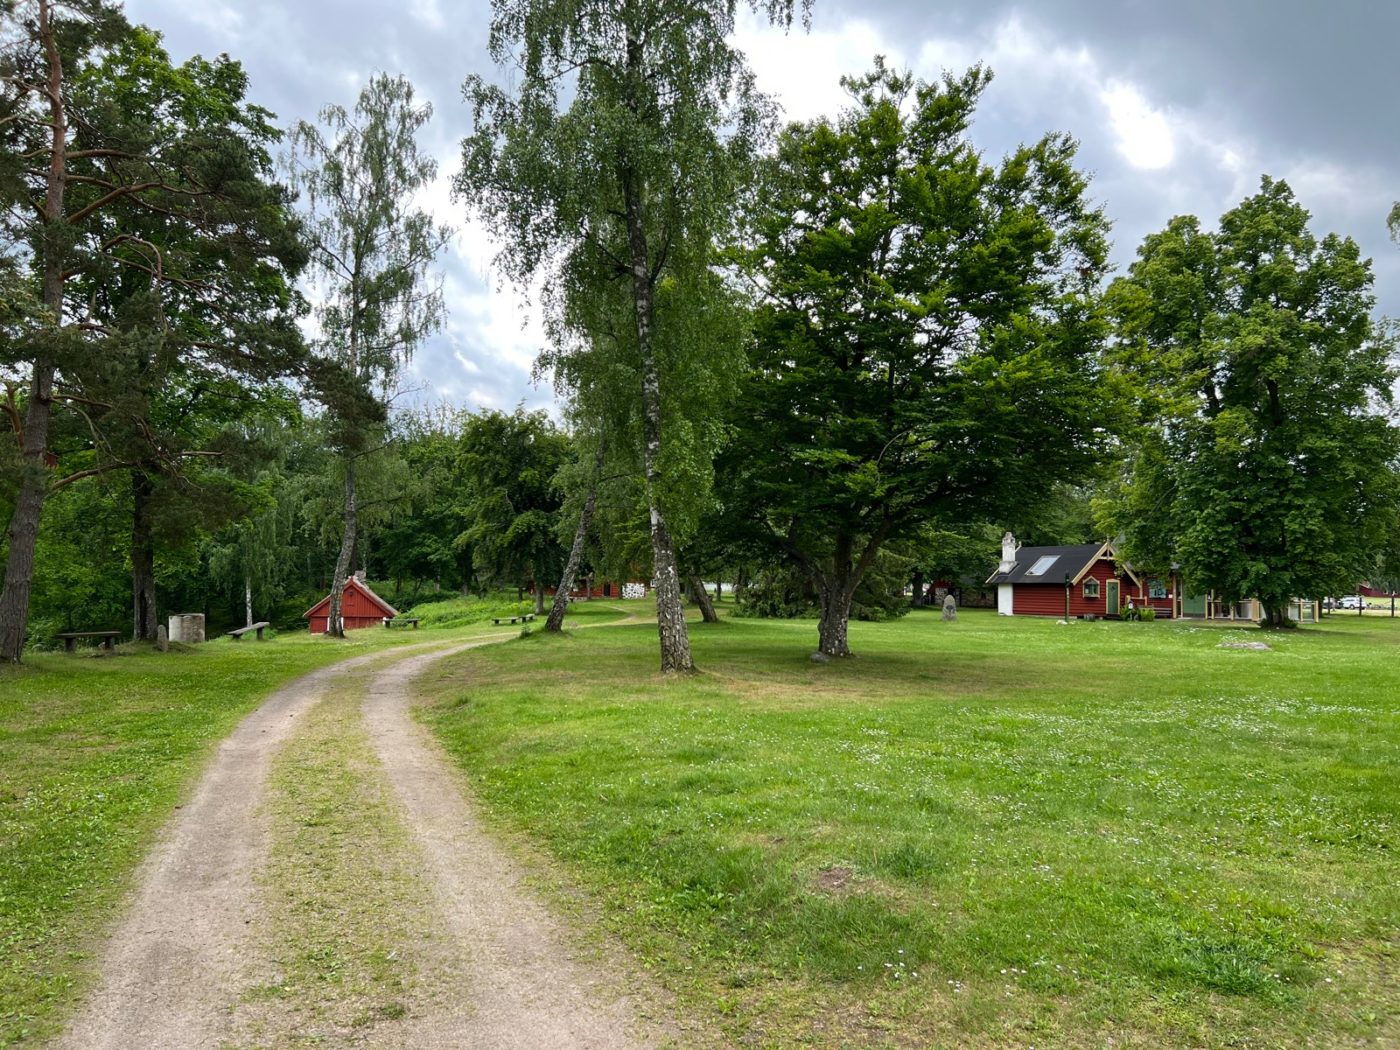 Wohnmobil in Schweden